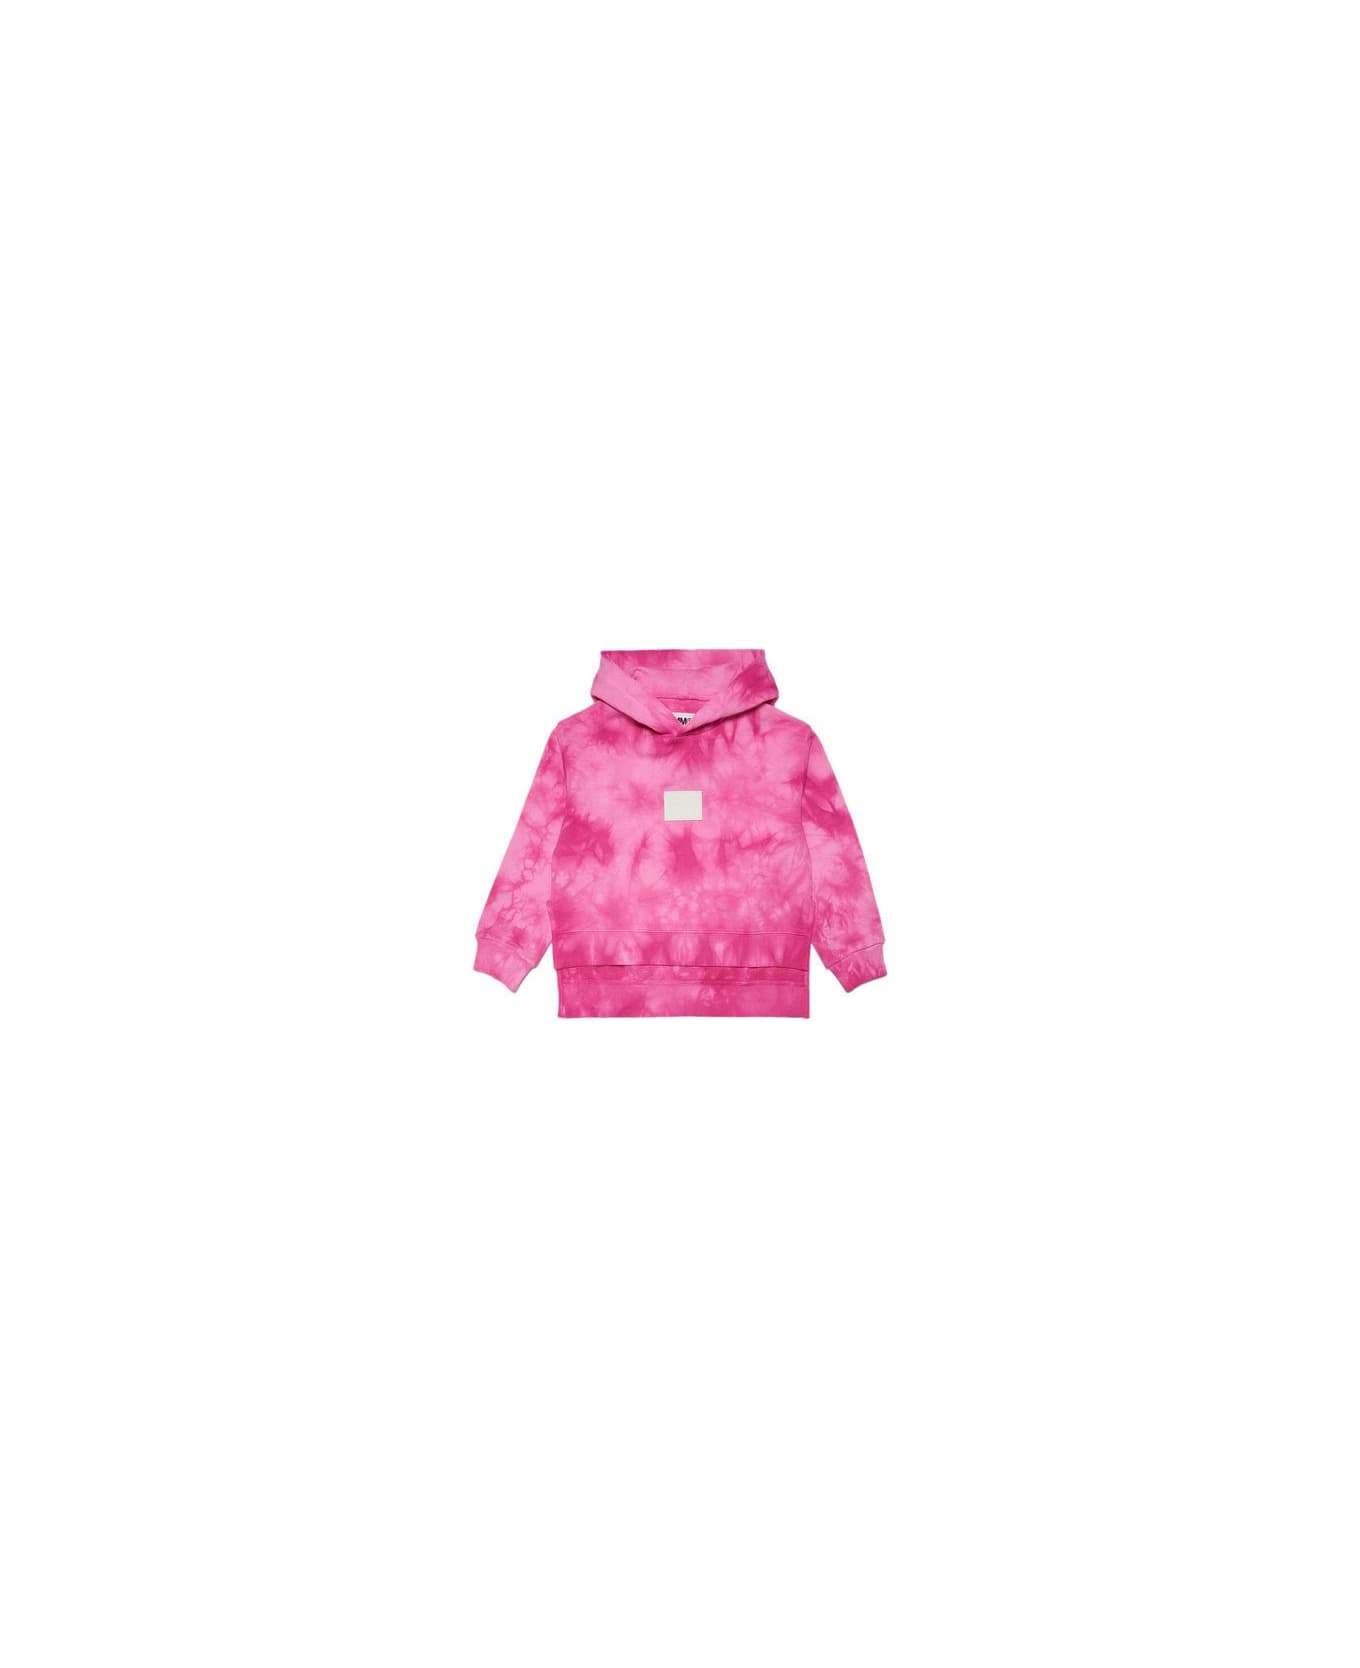 MM6 Maison Margiela Mm6s44u Sweat-shirt Maison Margiela Pink Tie-dye Effect Hooded Sweatshirt - Super pink